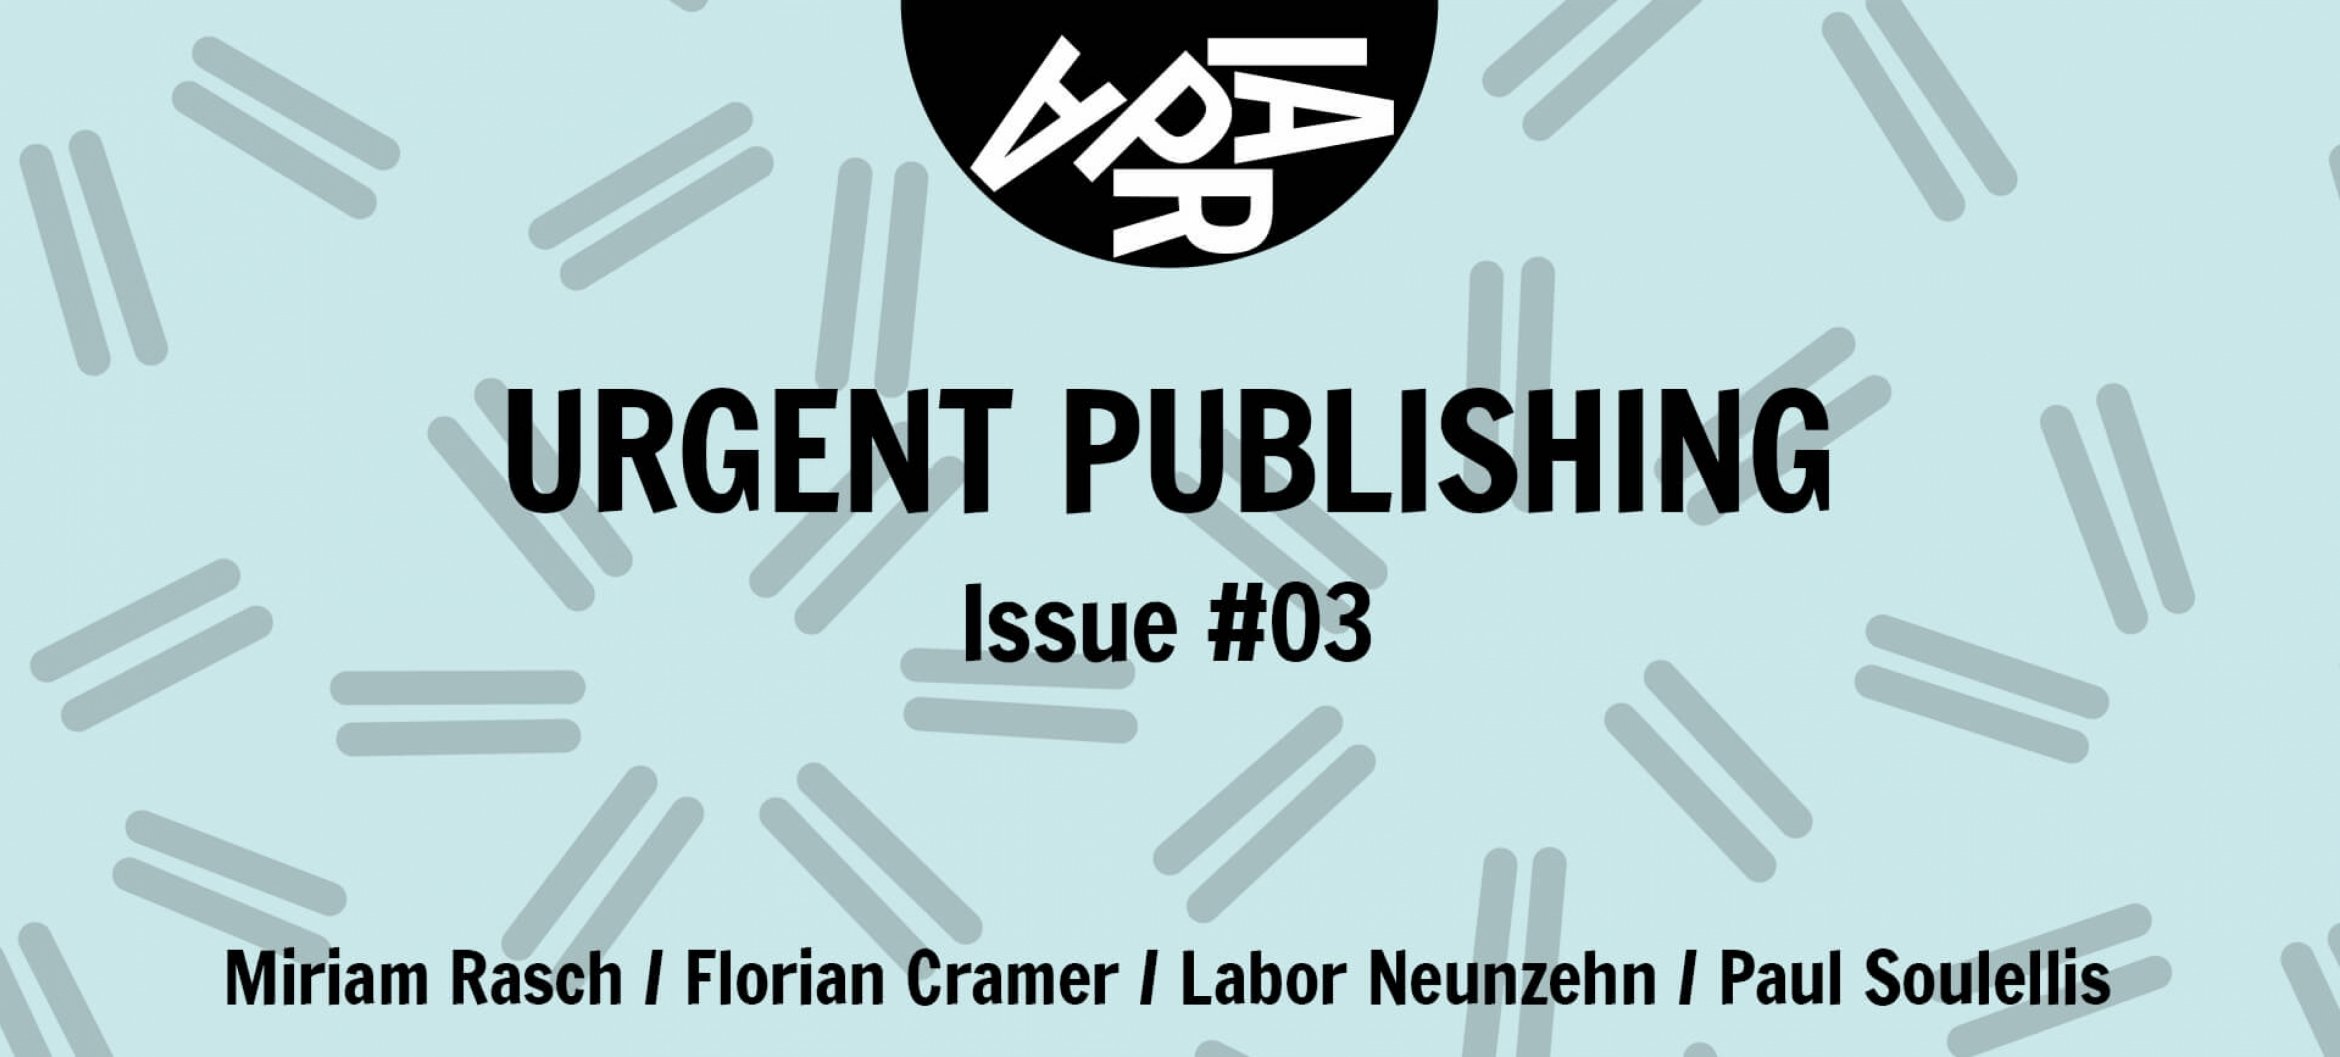 APRIA Journal Issue #3: Urgent Publishing